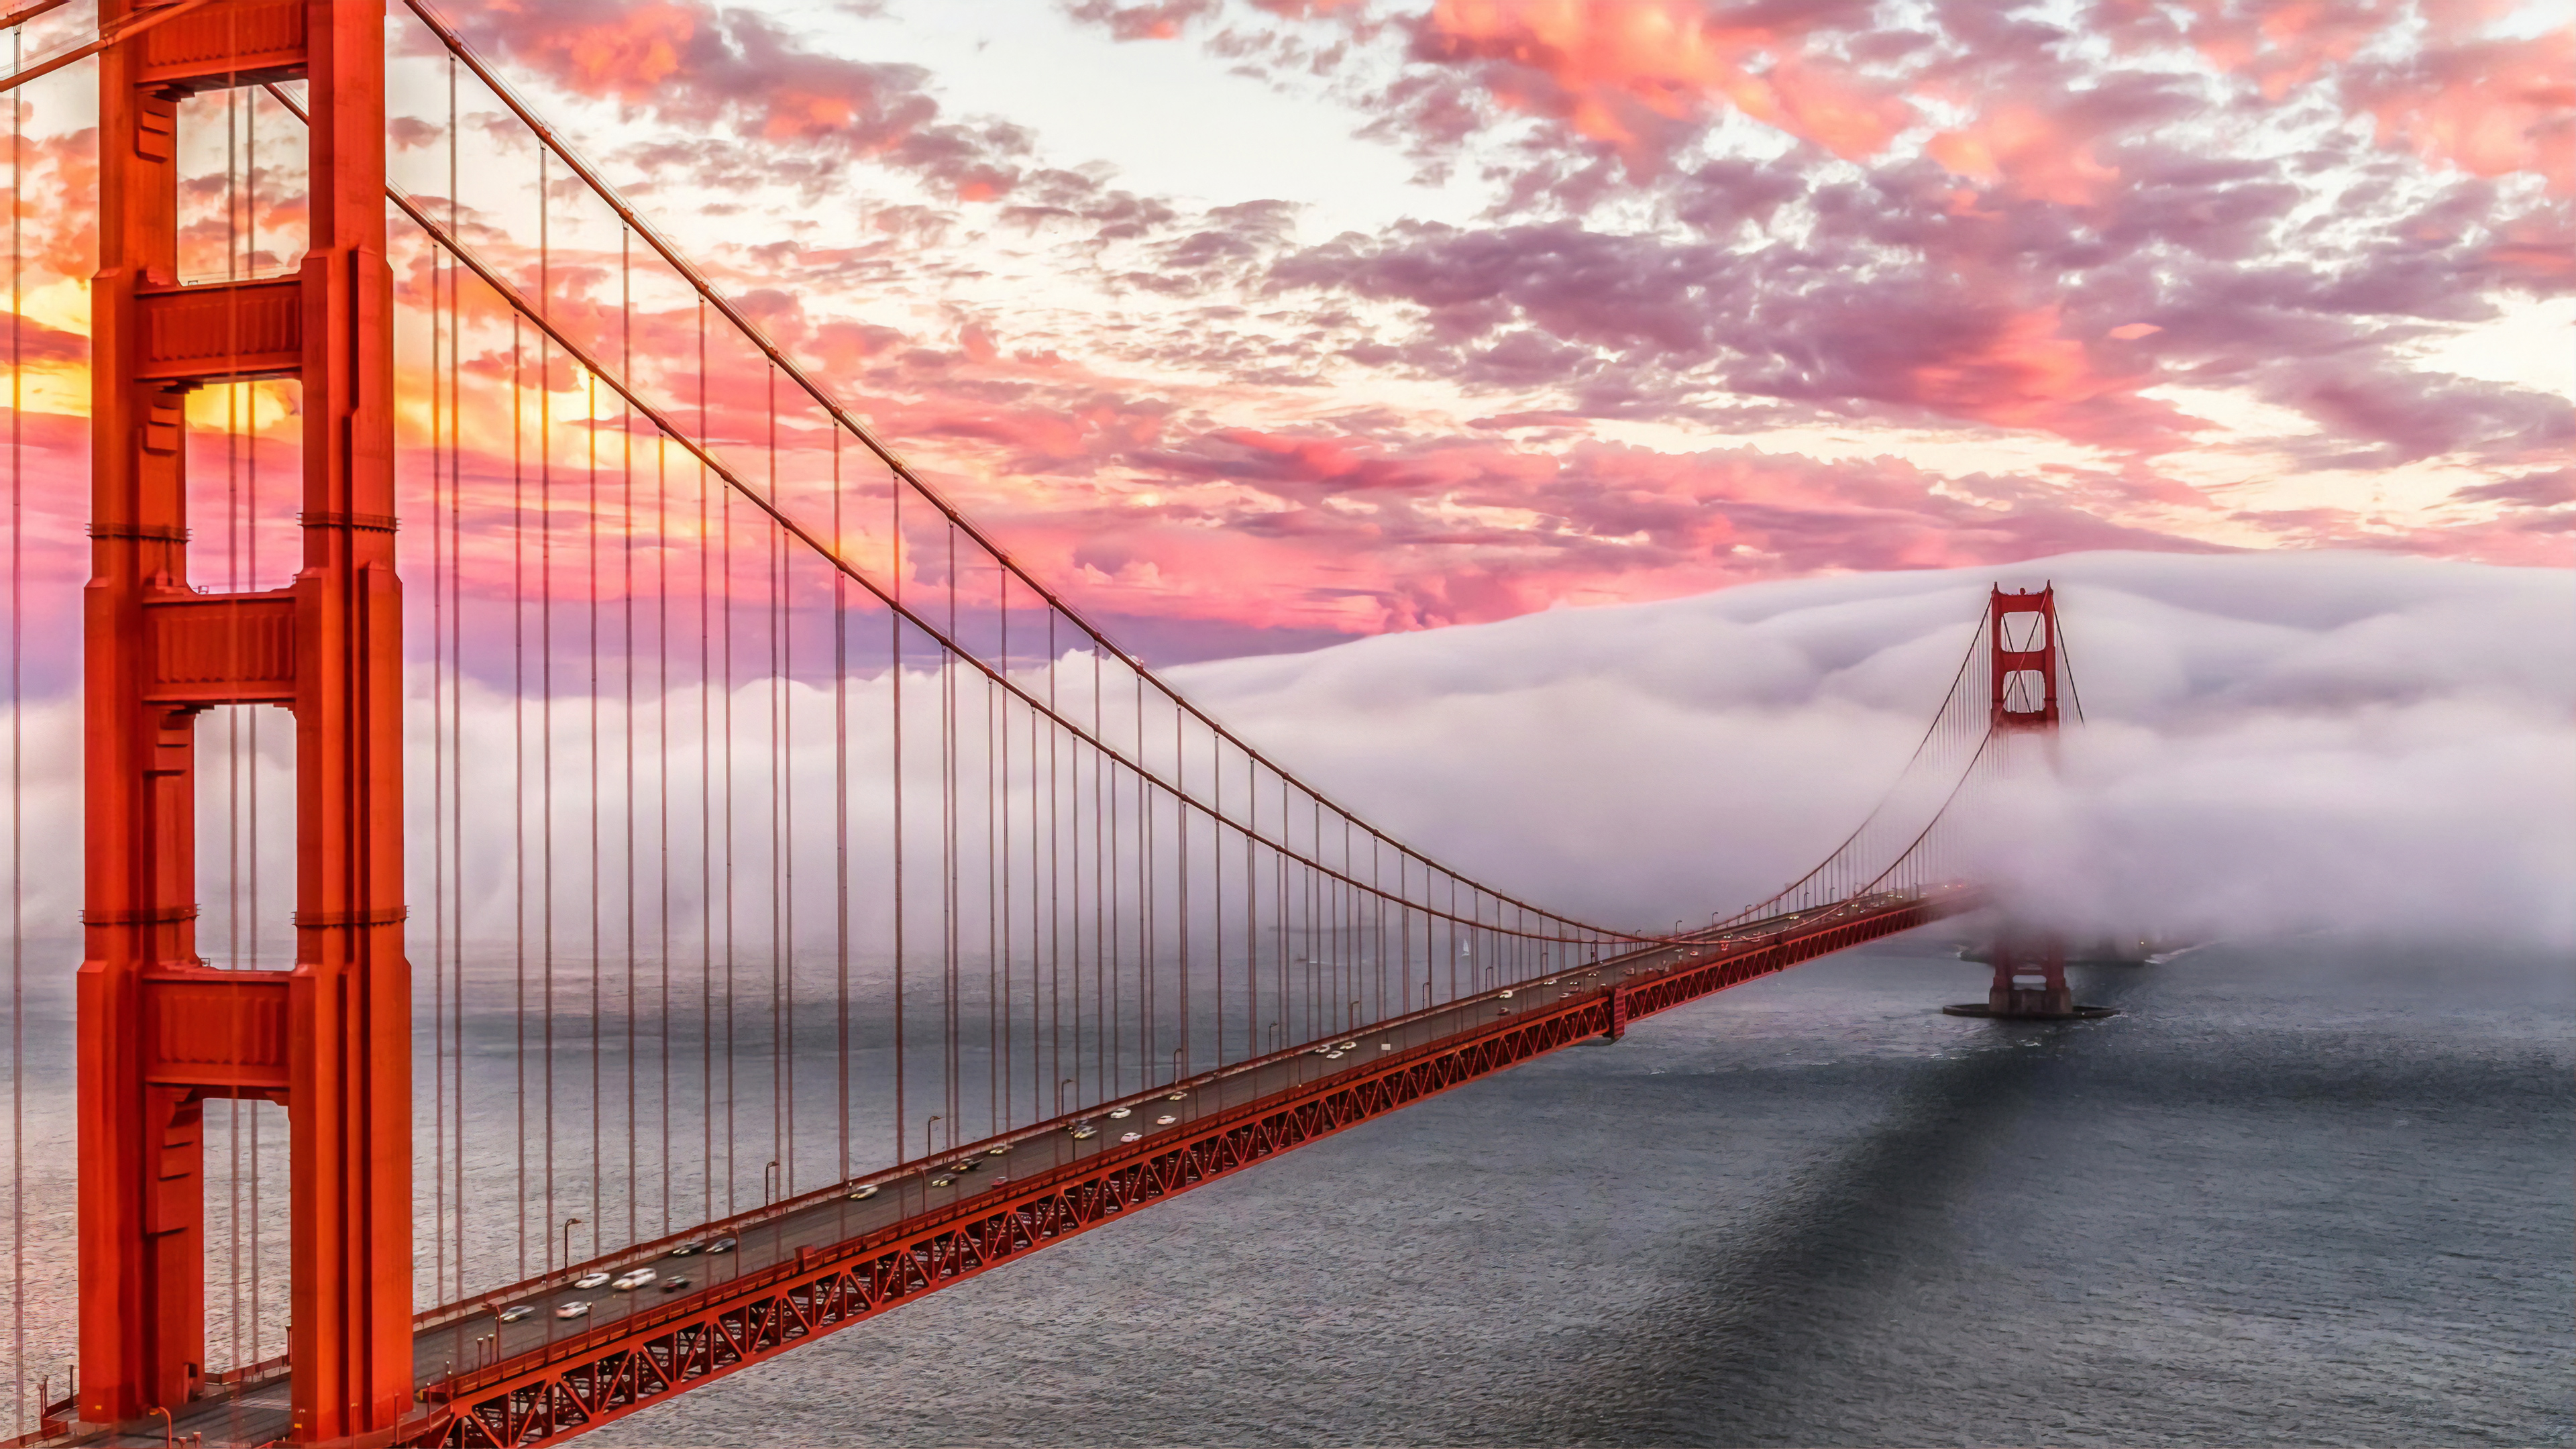 3840x2160 Golden Gate 4k Ultra HD Wallpaper by Dave Gord